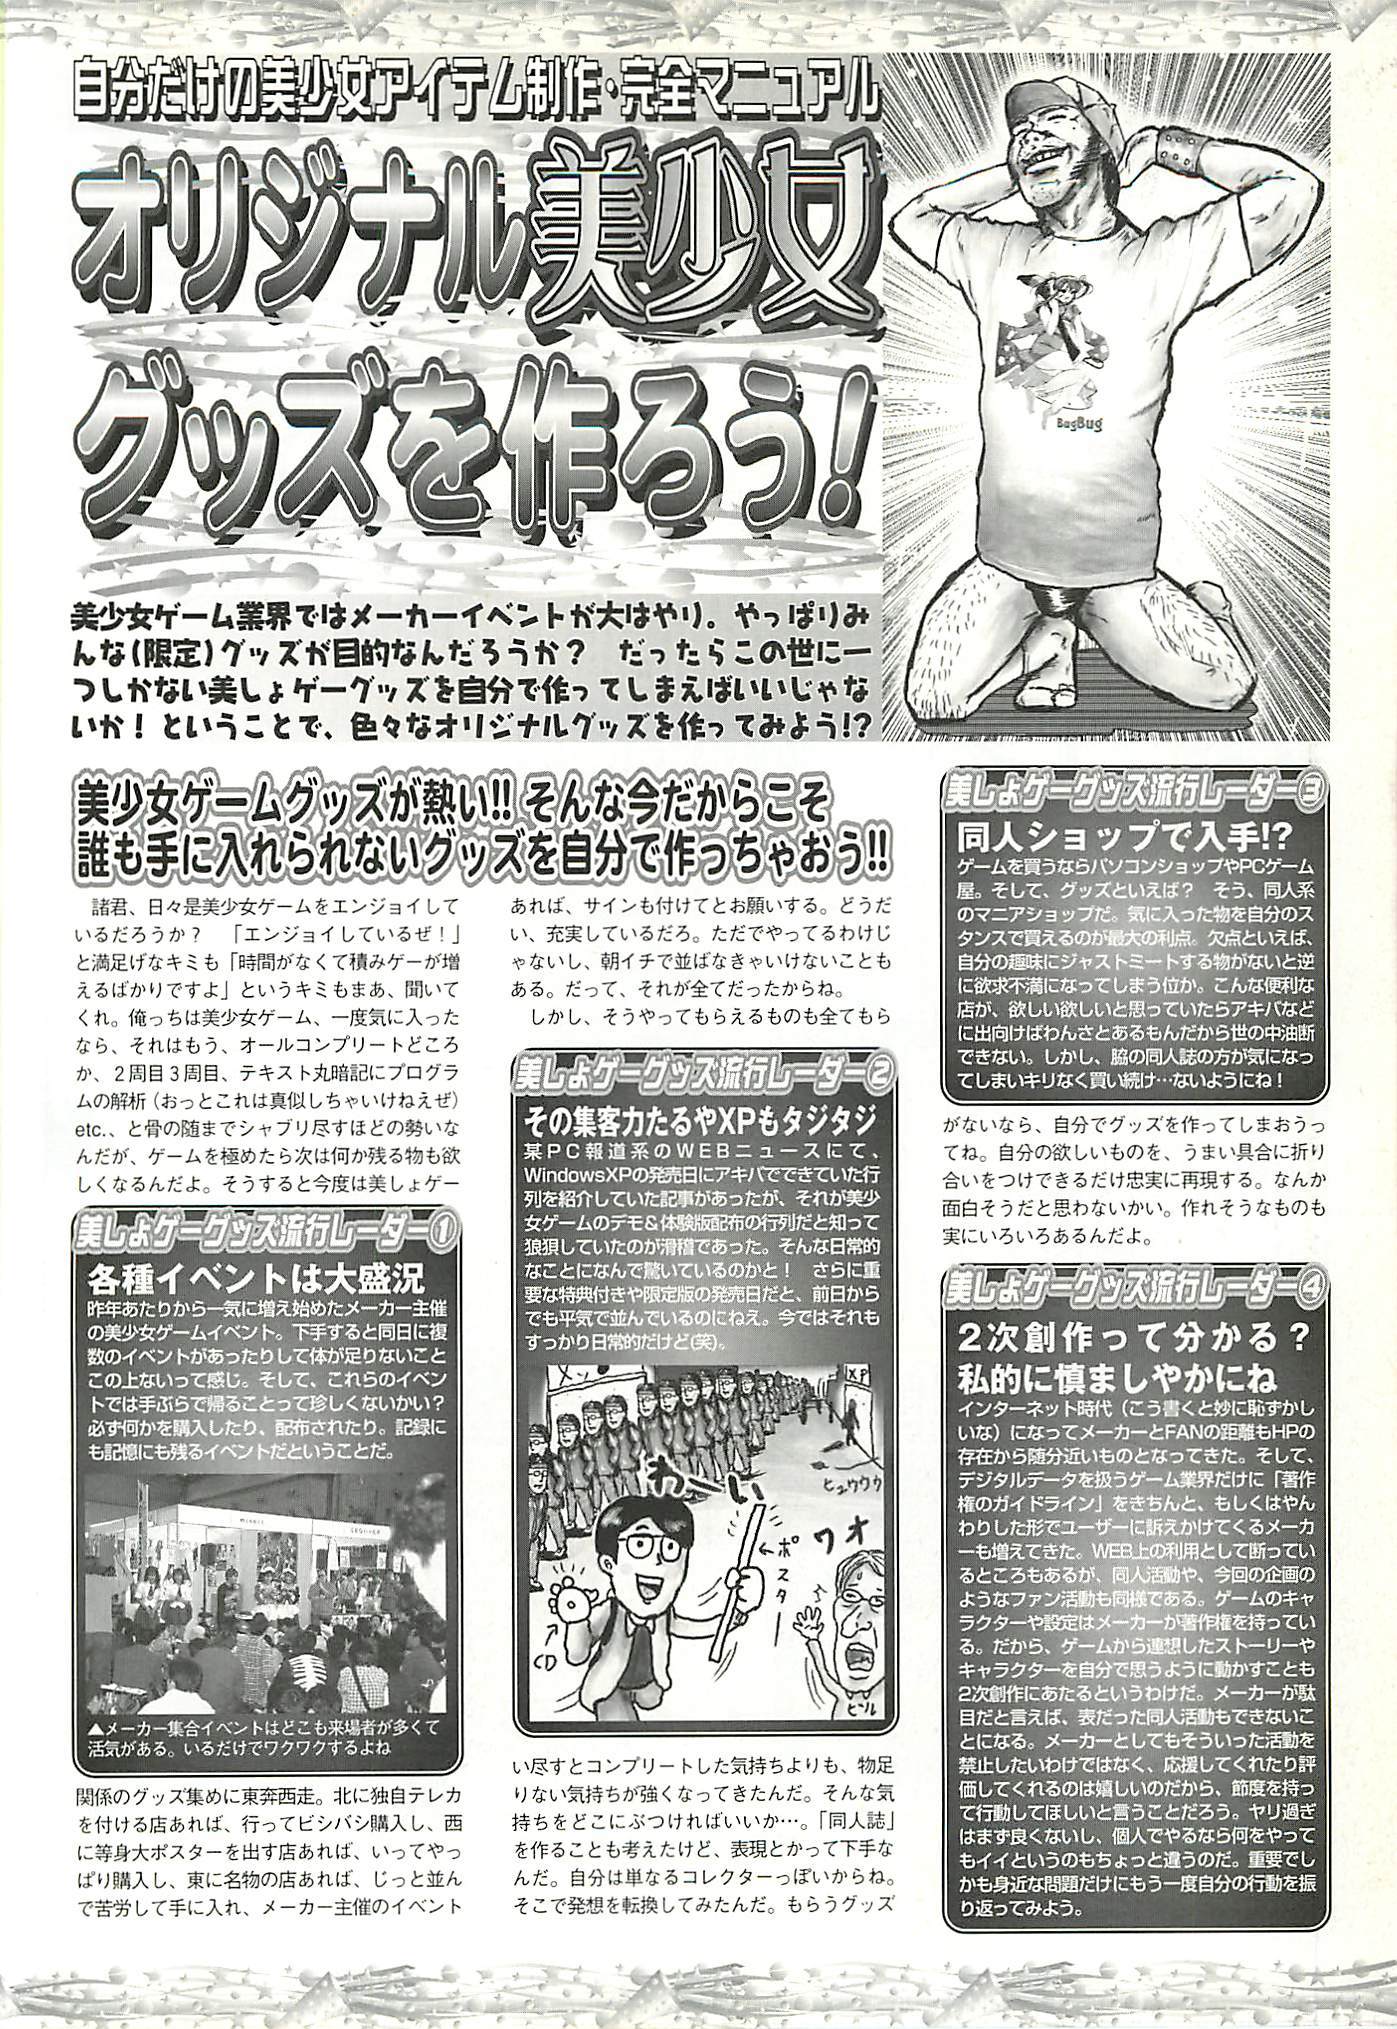 BugBug Magazine 2002-01 Vol 89